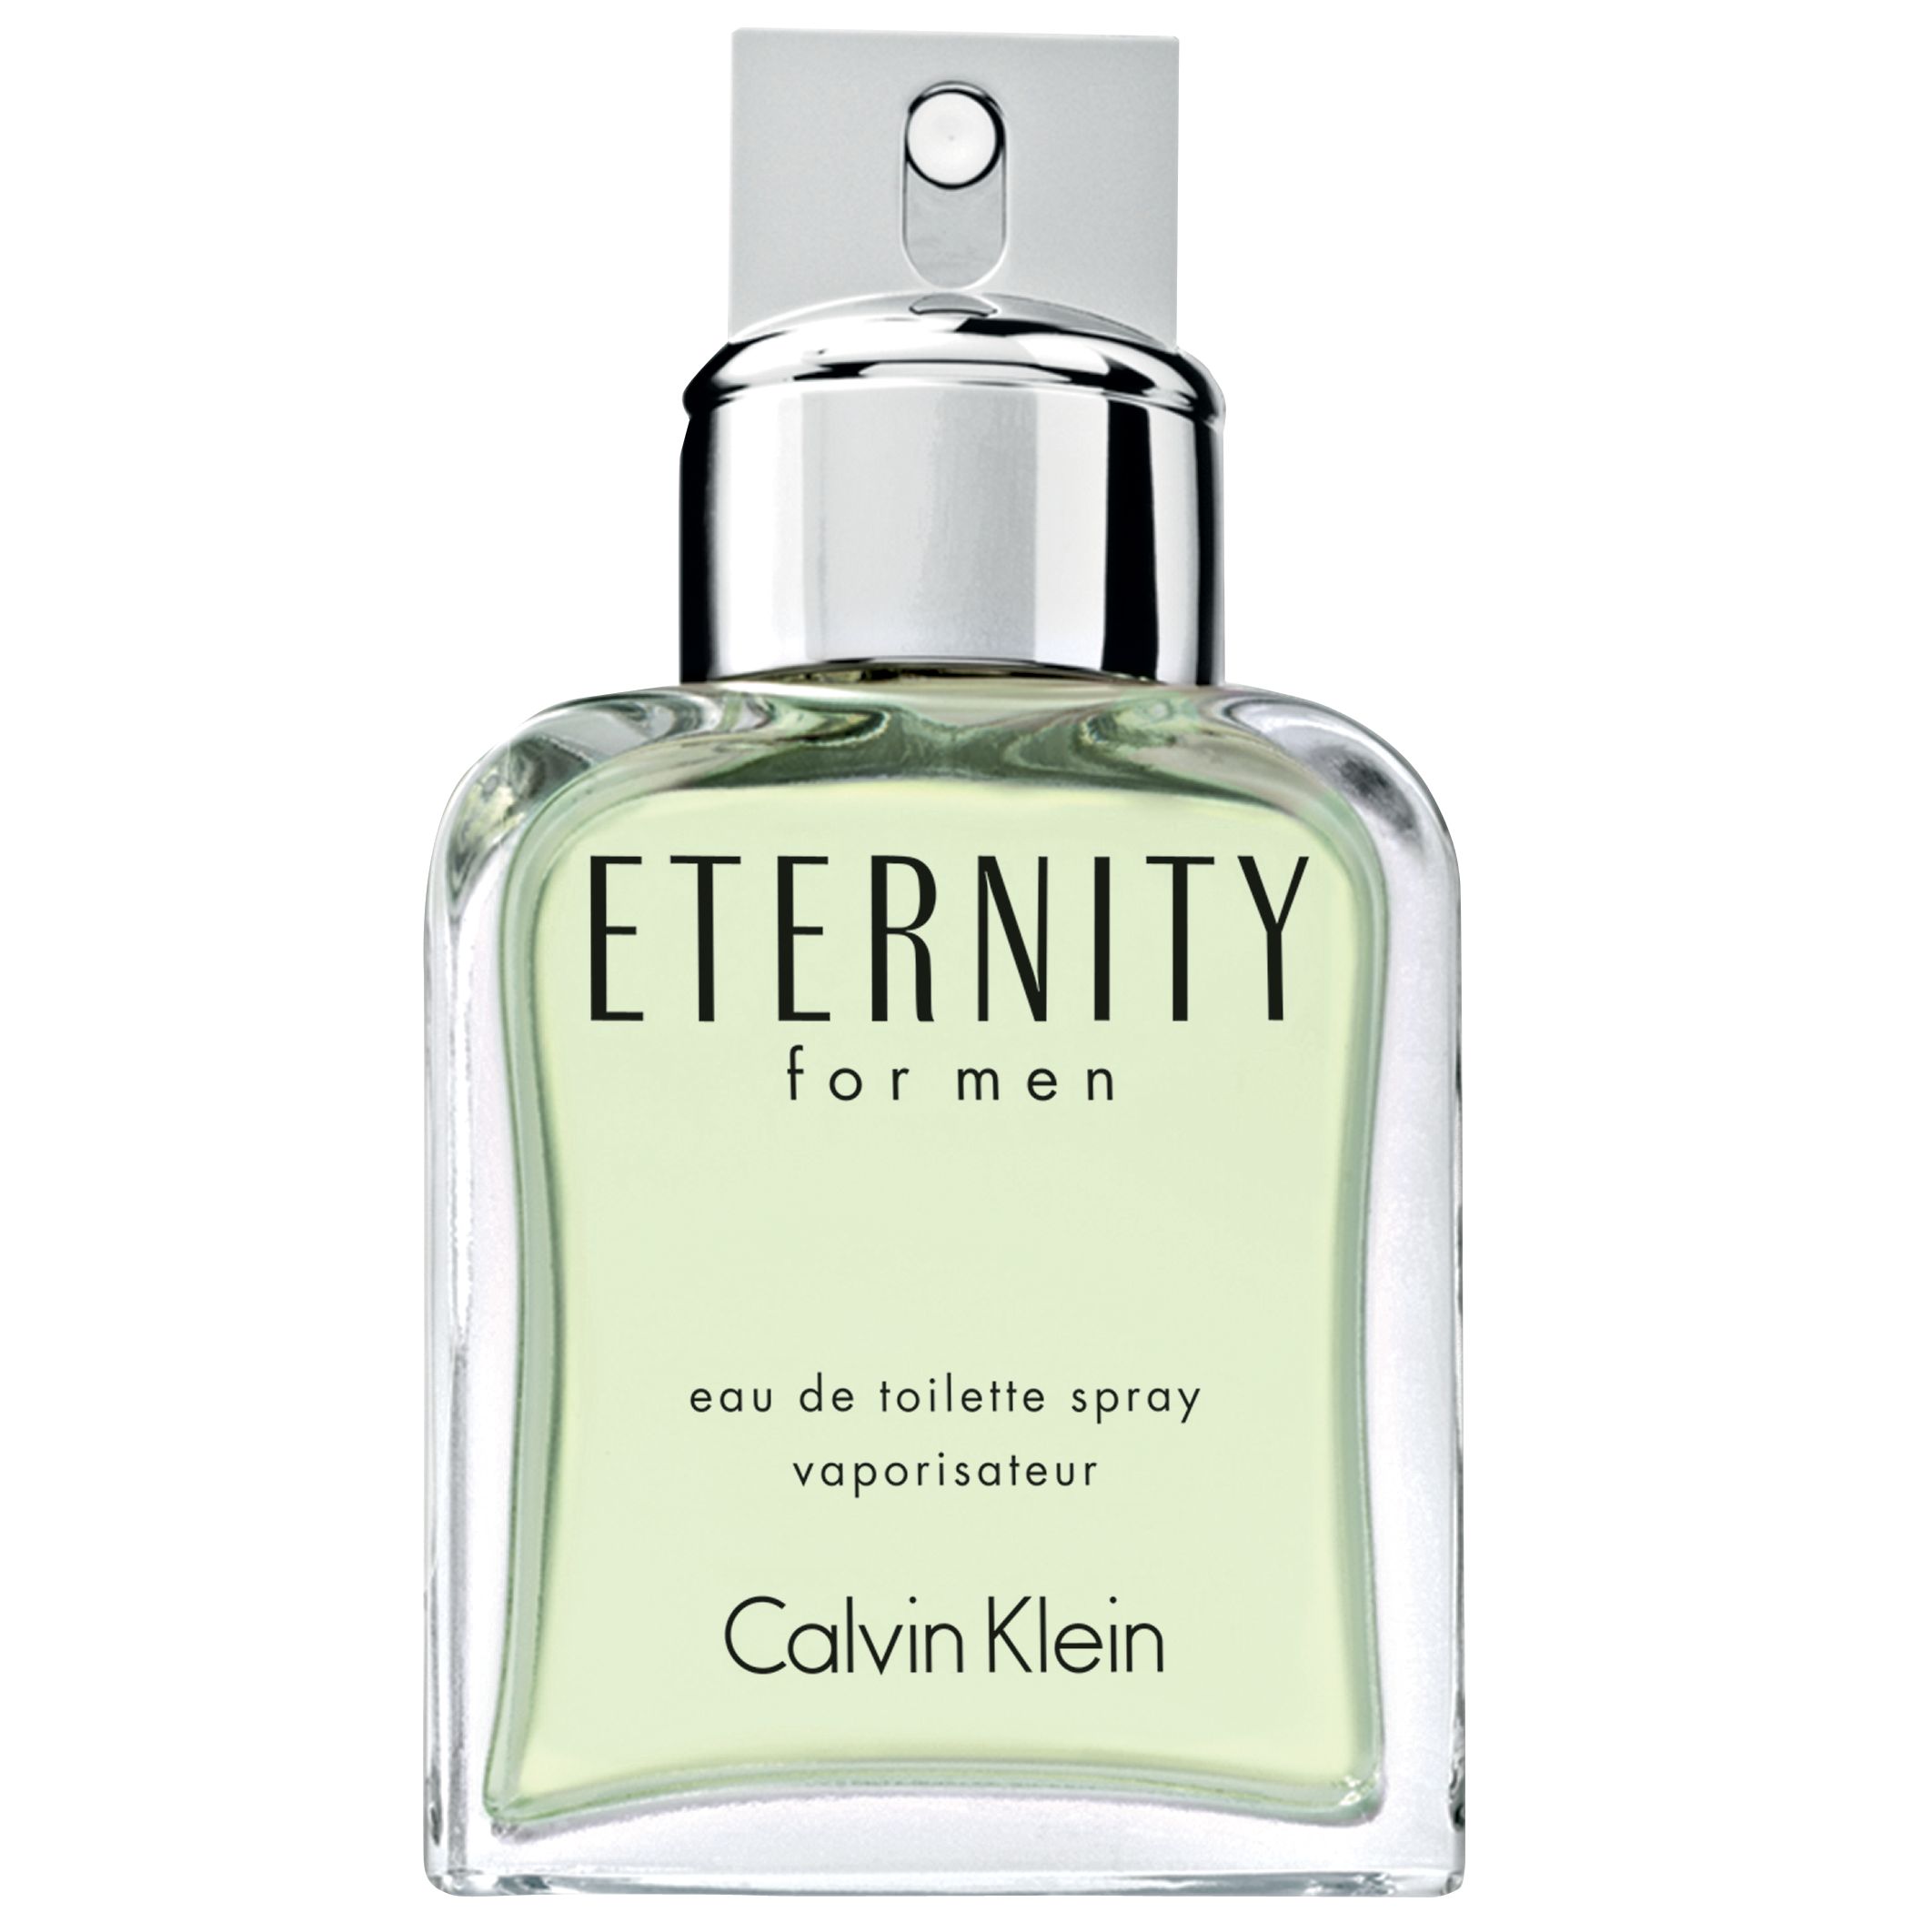 calvin klein Eternity for Men, Eau de Toilette Spray, 100ml